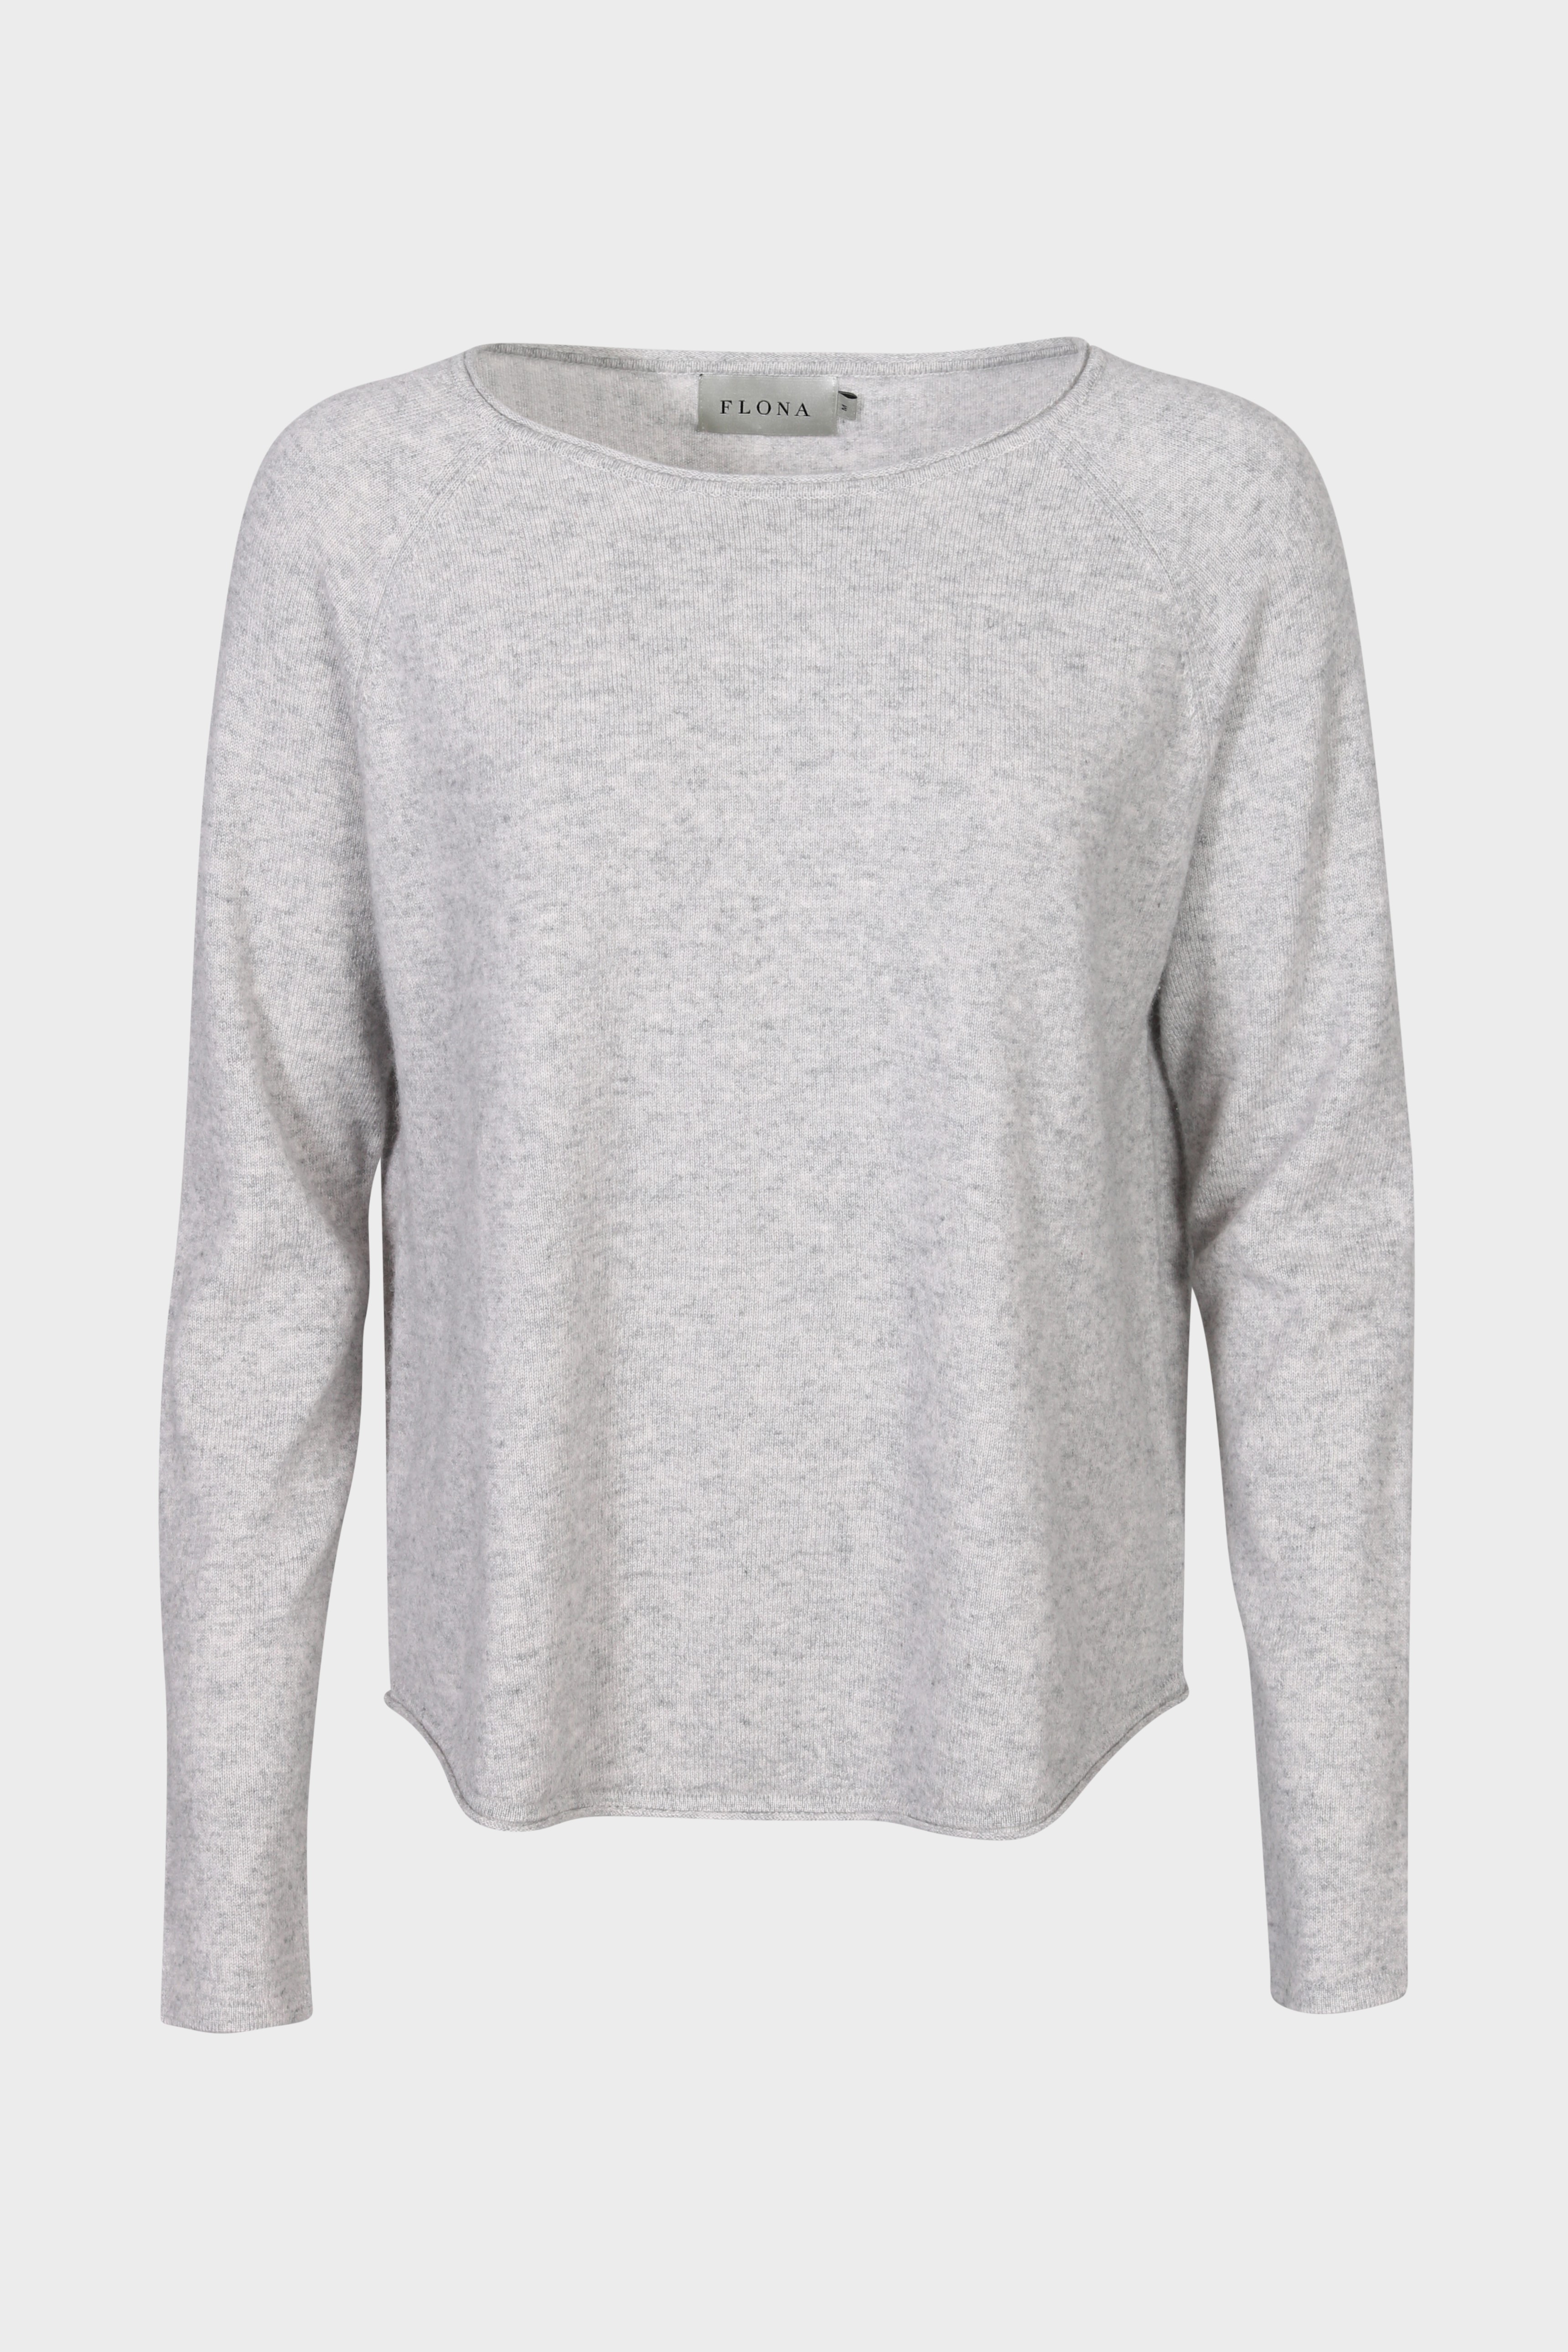 FLONA Cashmere Sweater in Greige XS